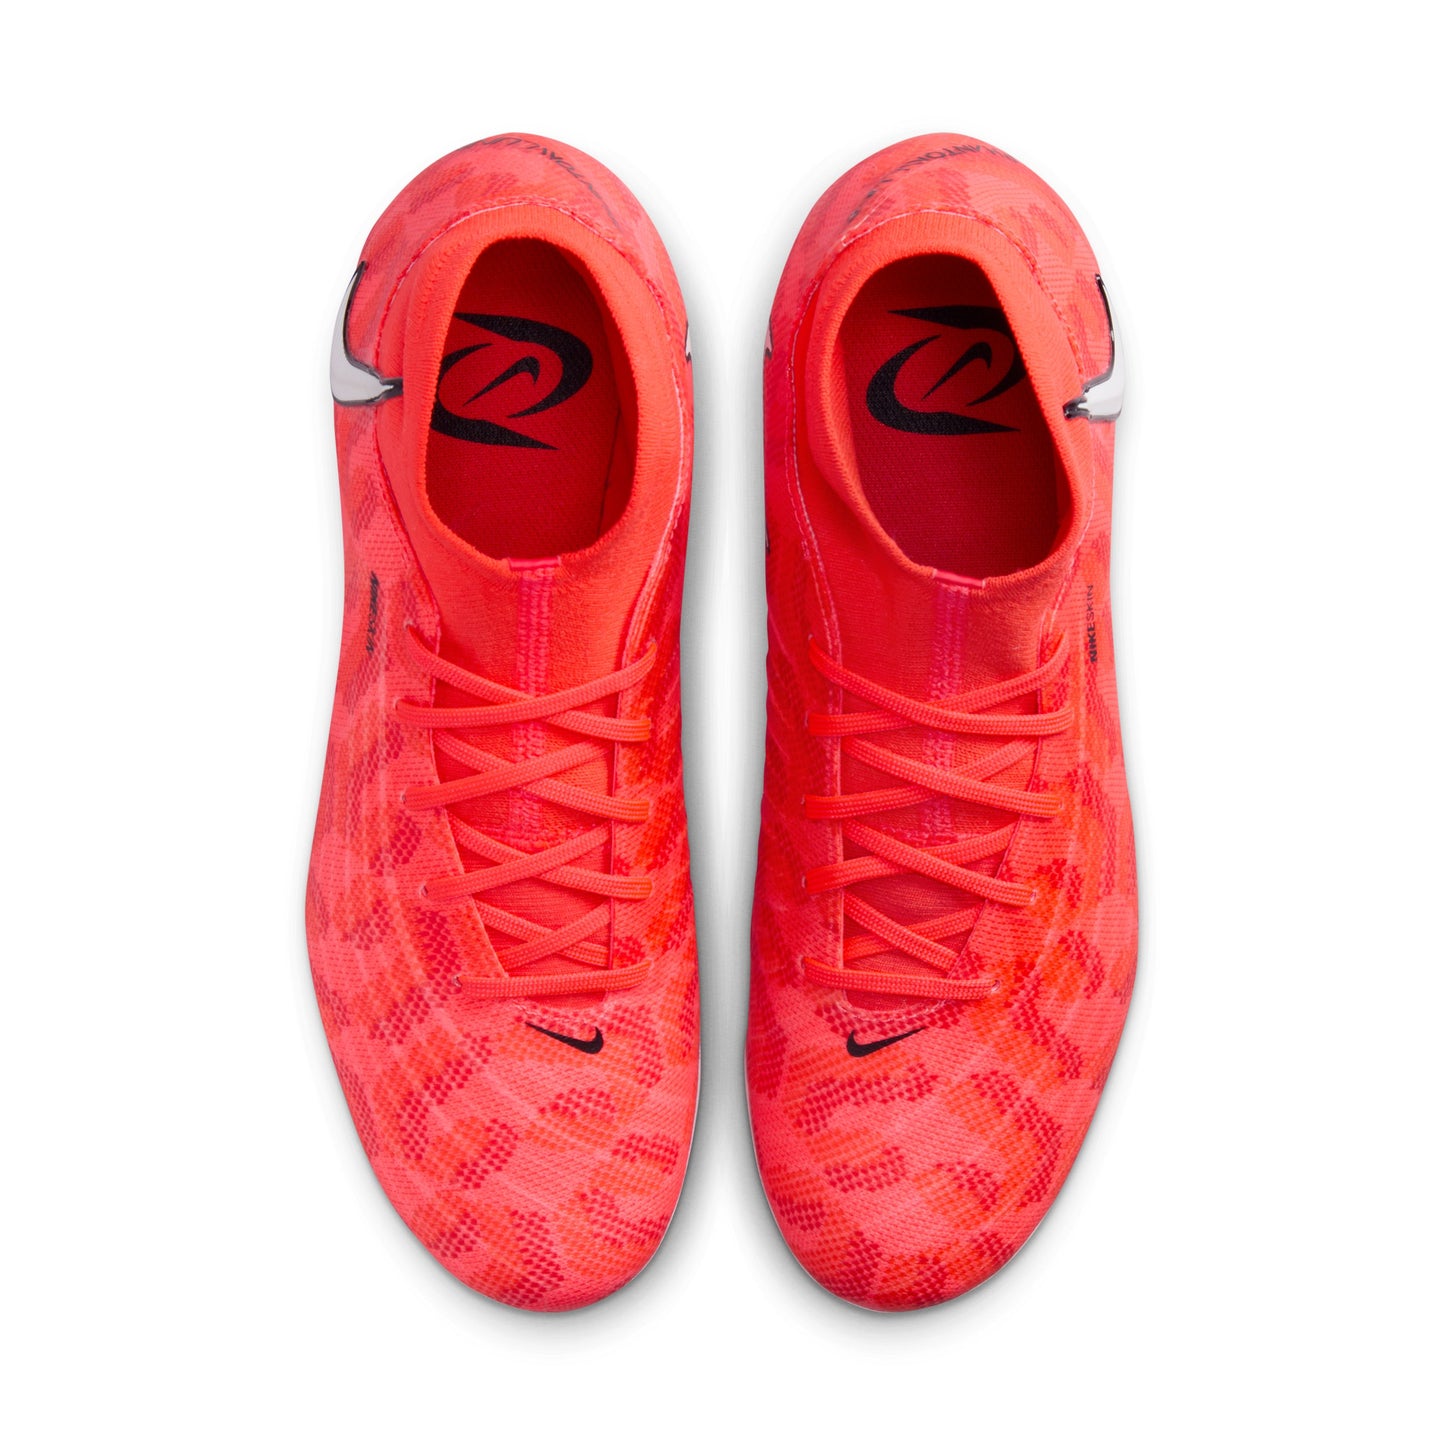 Nike Phantom Luna FG Soccer Cleats Crimson White